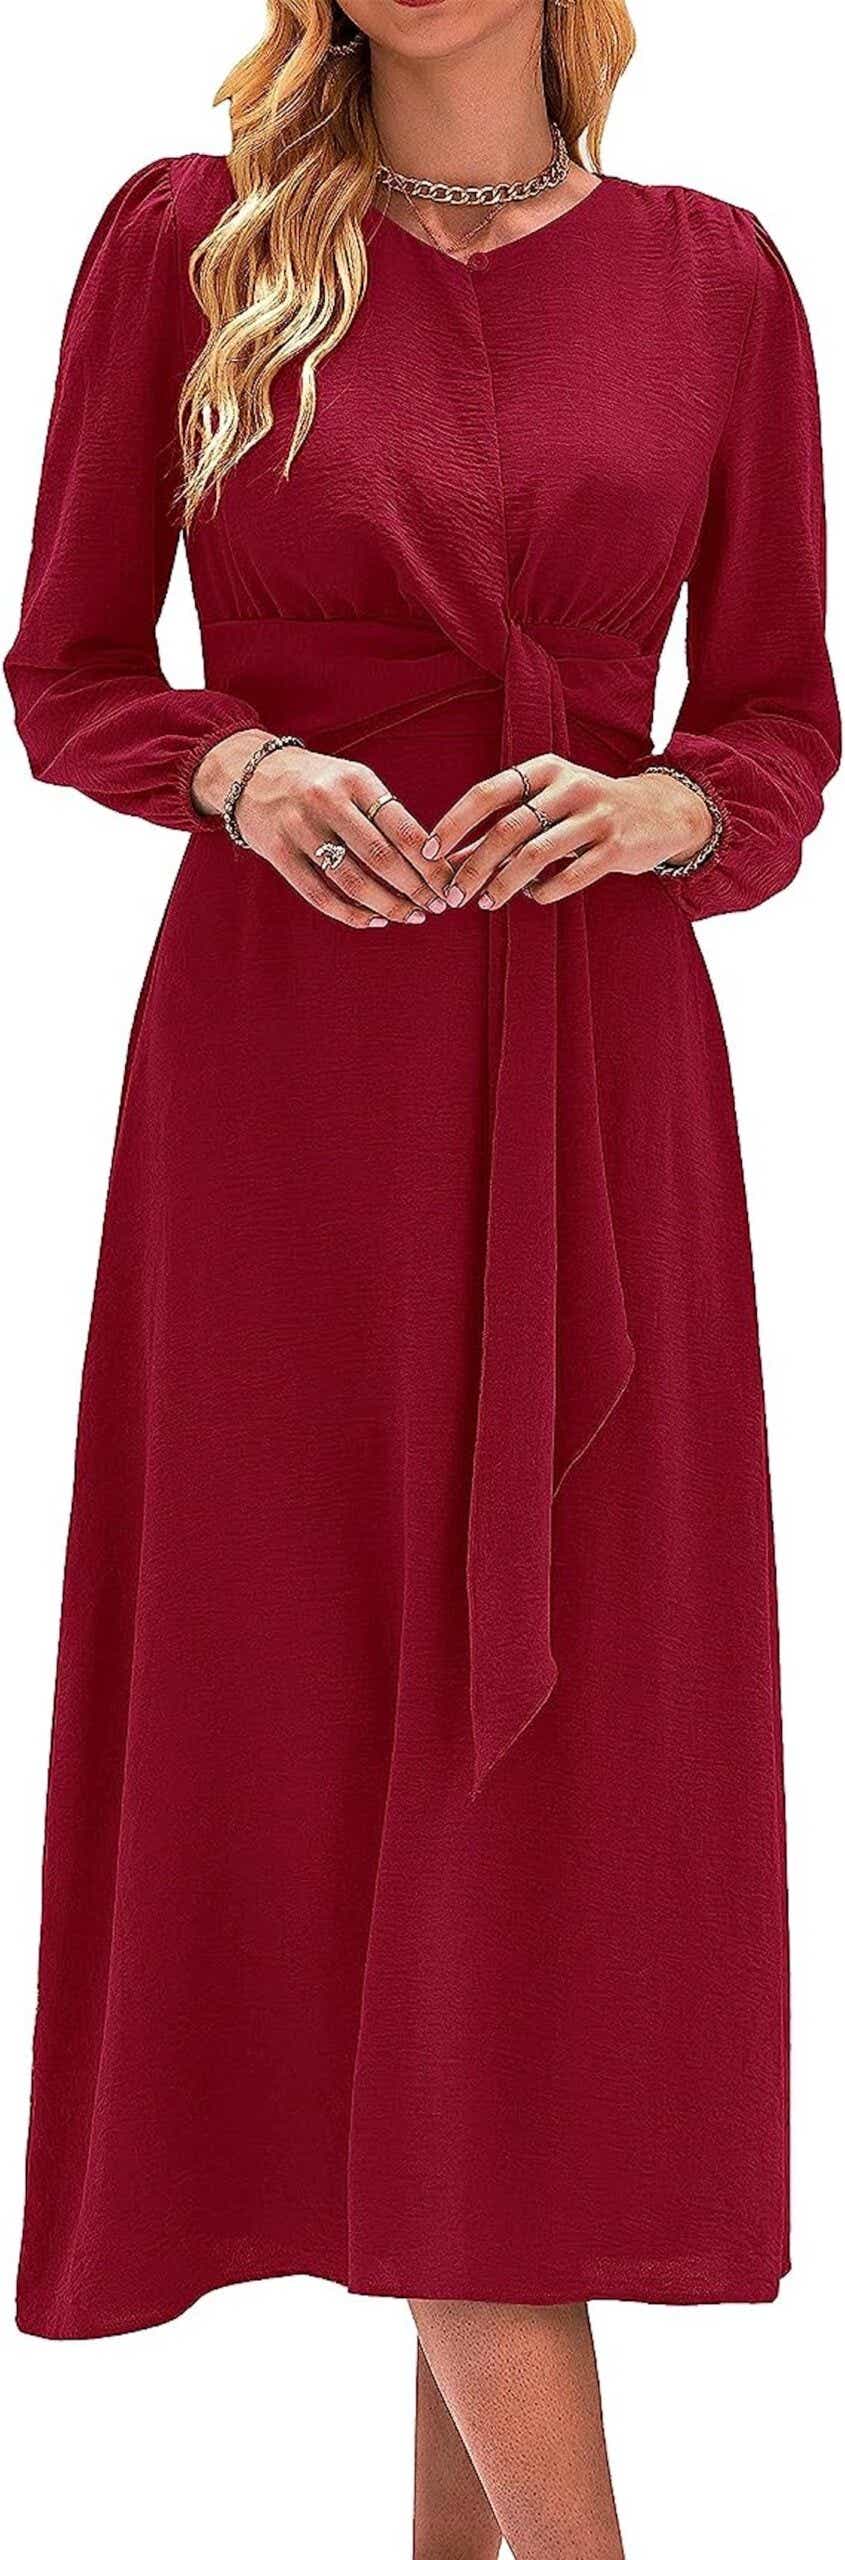 A long cocktail dress